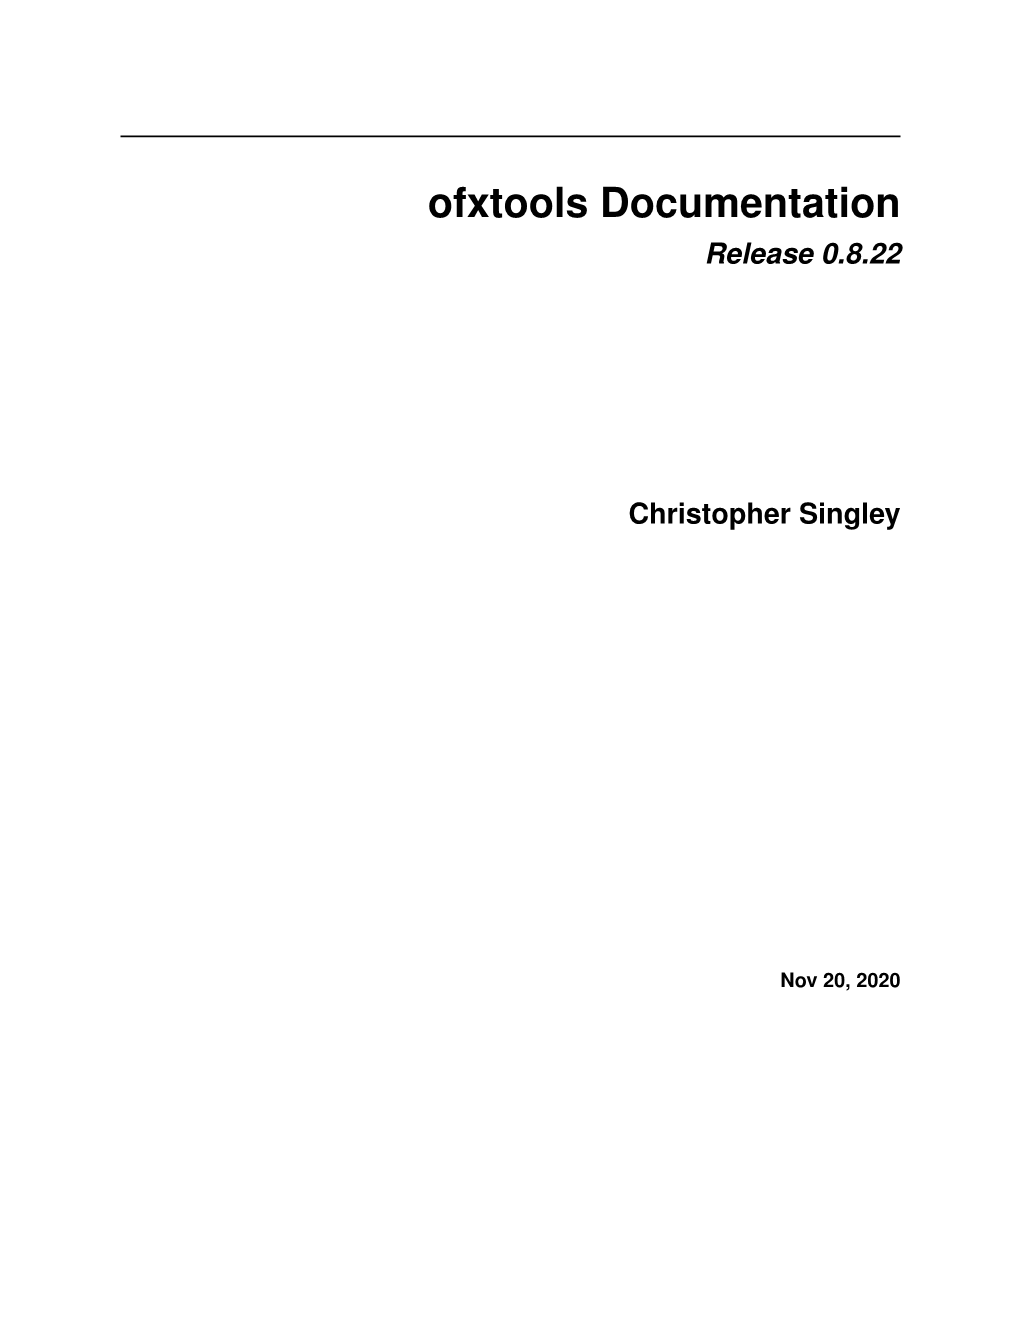 Ofxtools Documentation Release 0.8.22